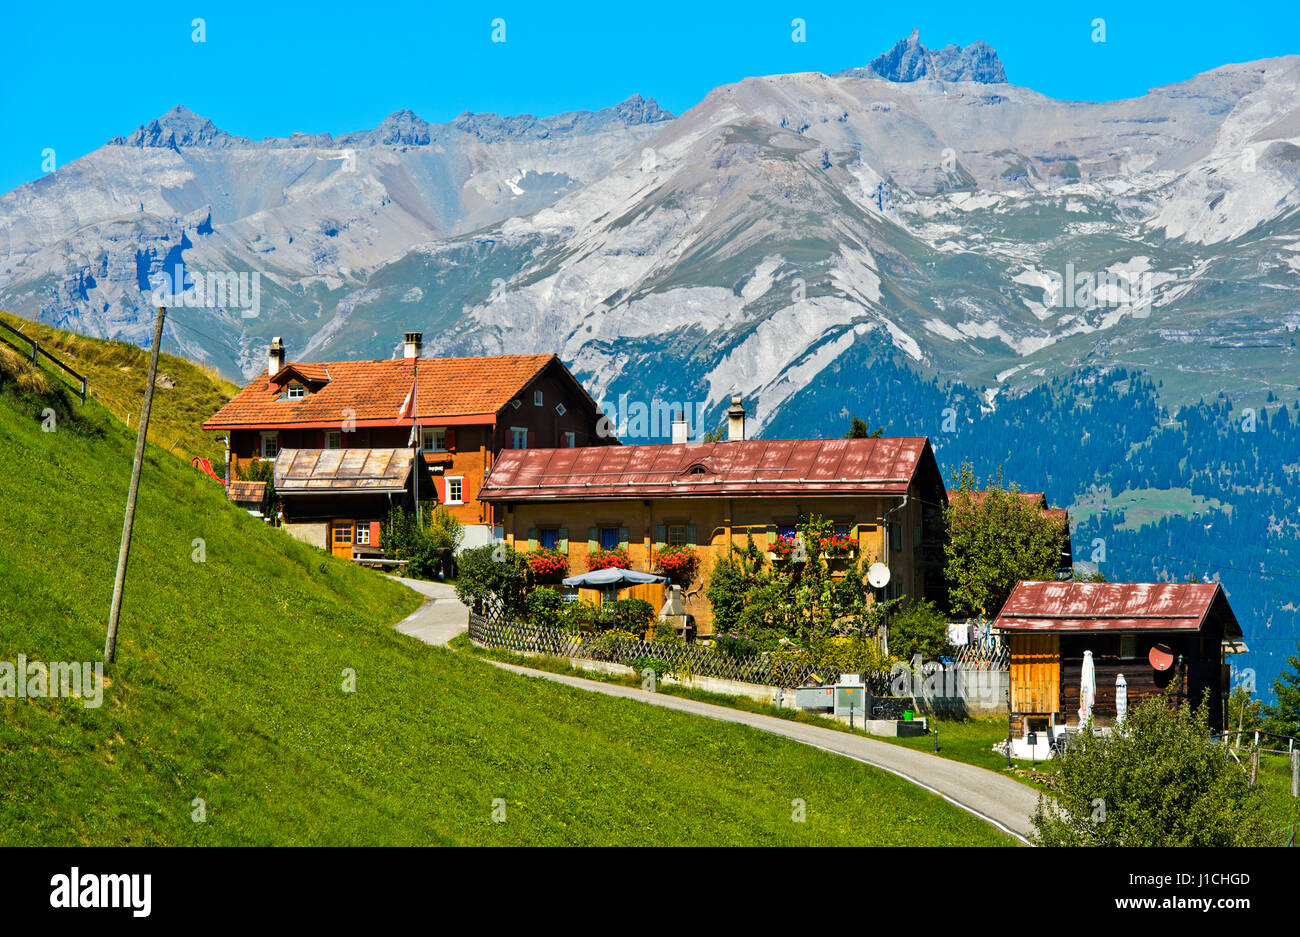 Hamlet Acla, Tenna, Safiental, behind to the right peak Ringelspitz, Grisons, Switzerland Stock Photo